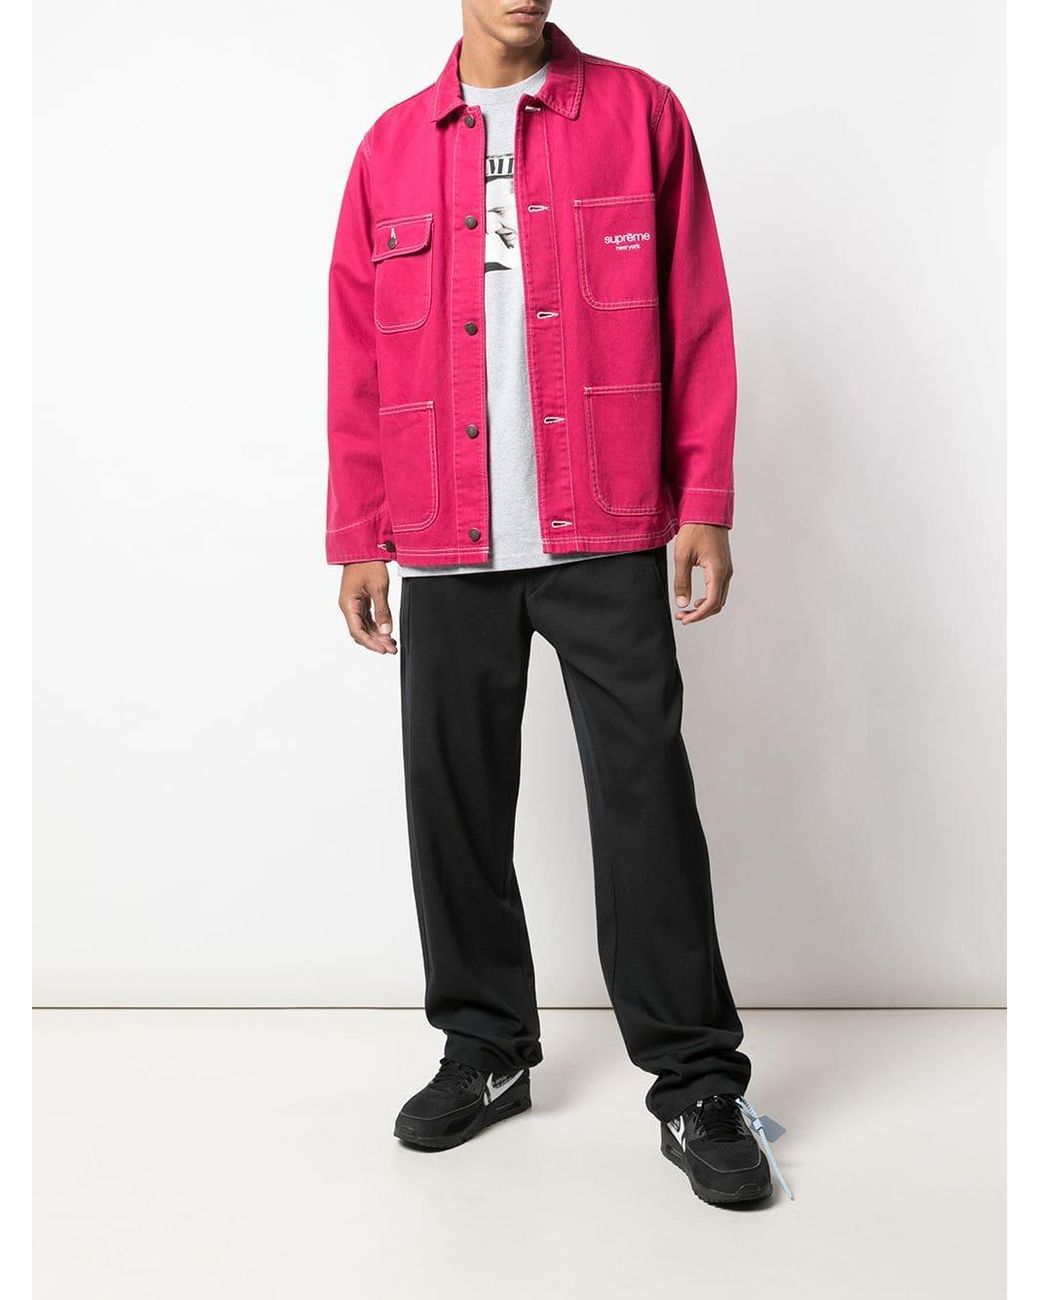 Supreme Denim Chore Jacket in Pink for Men | Lyst Canada